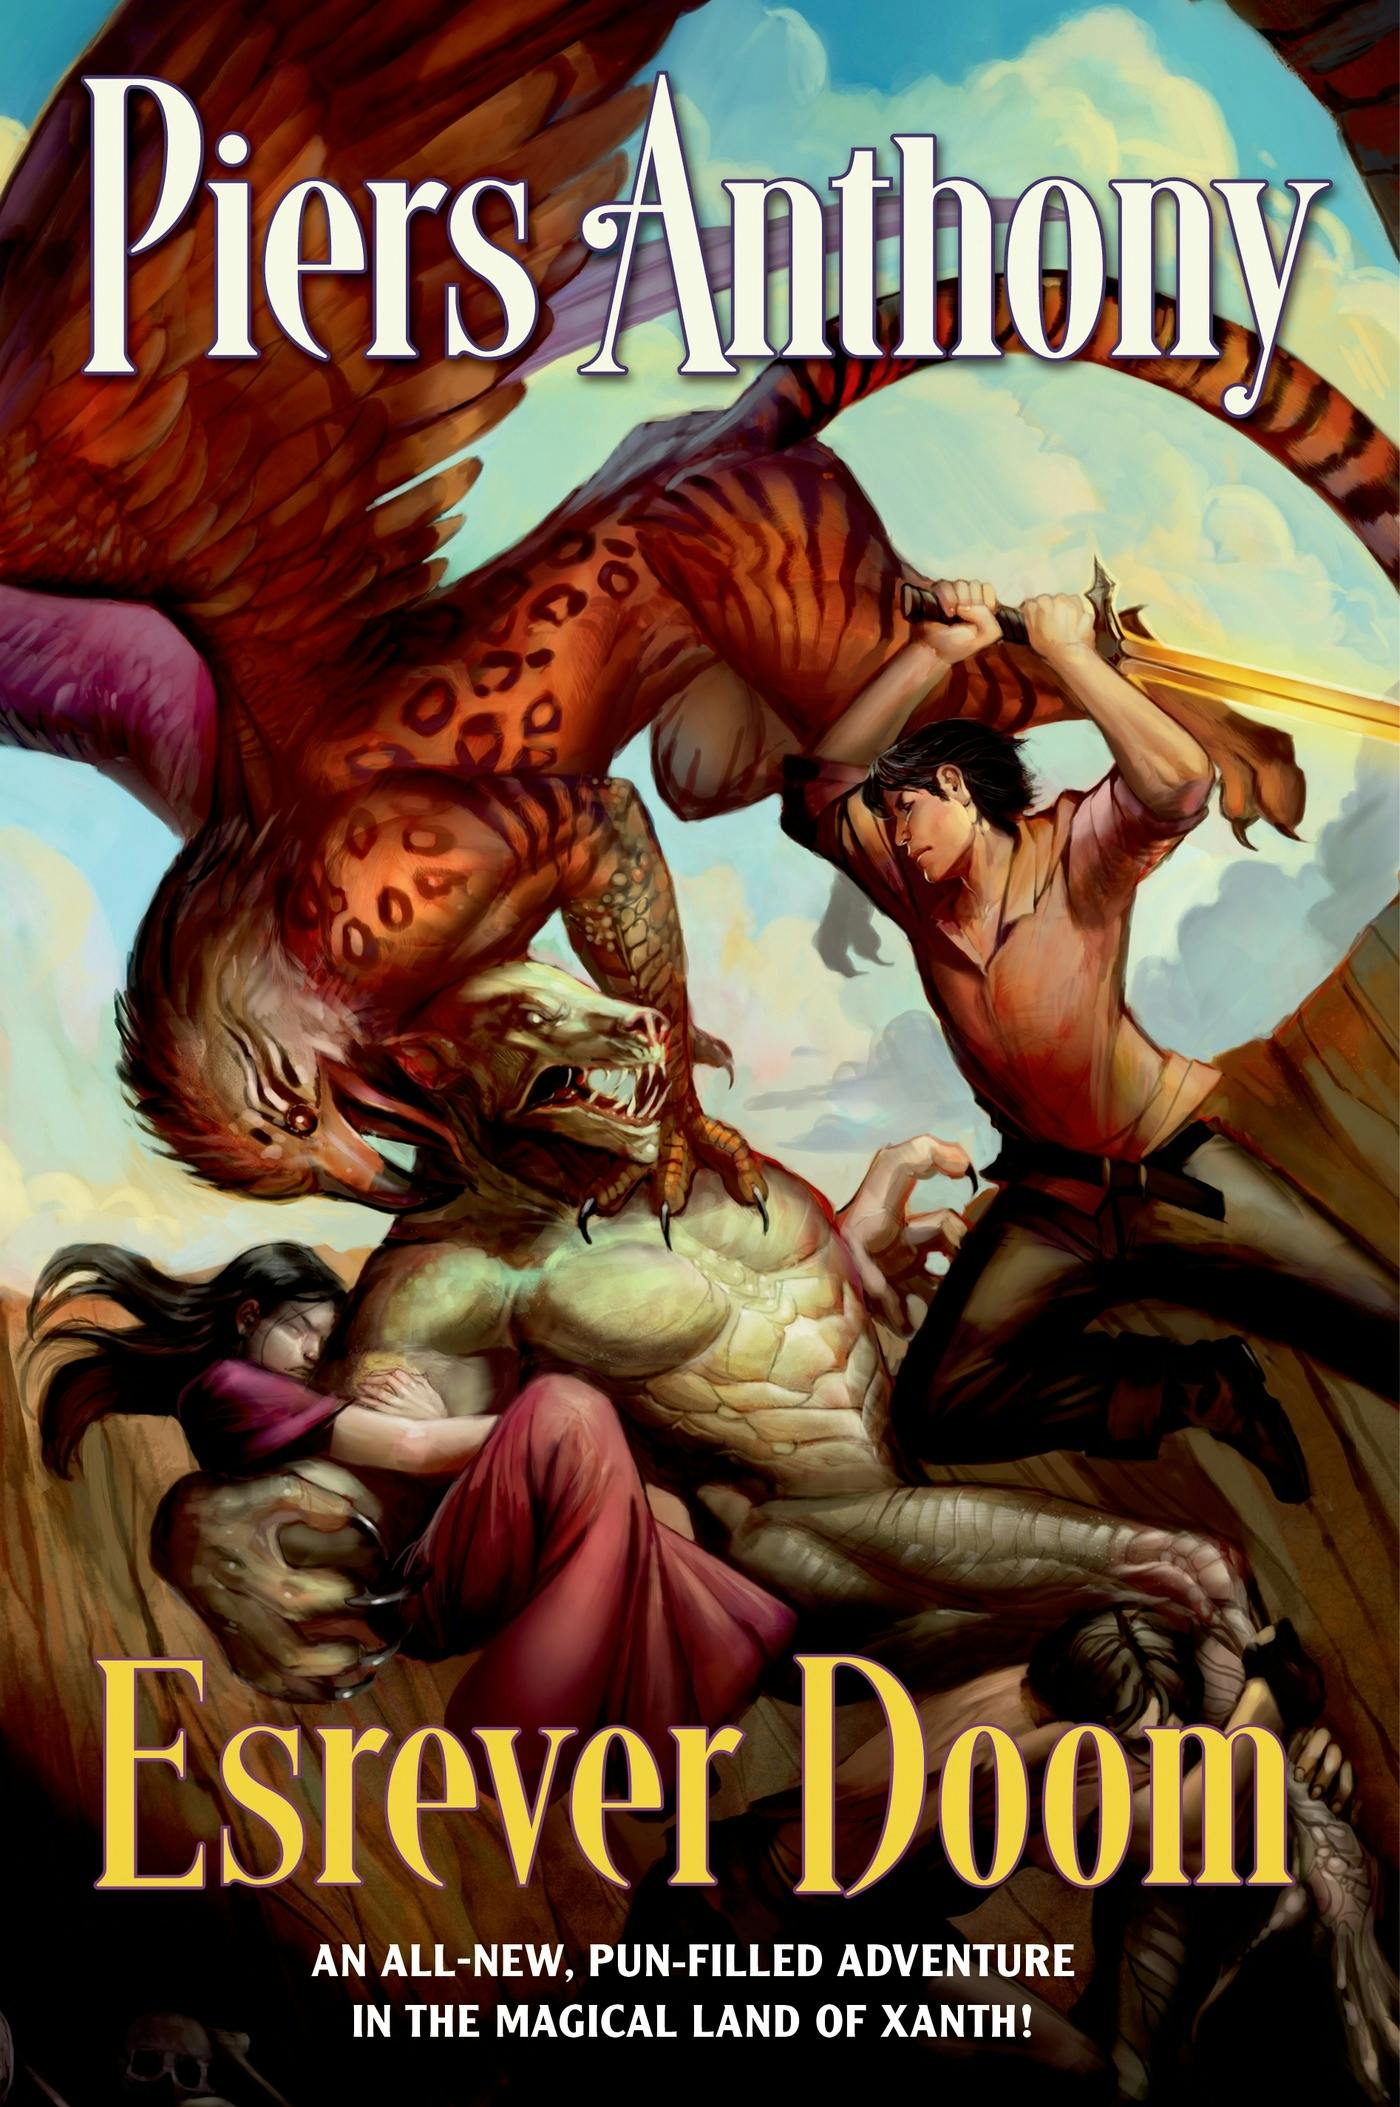 Cover for the book titled as: Esrever Doom